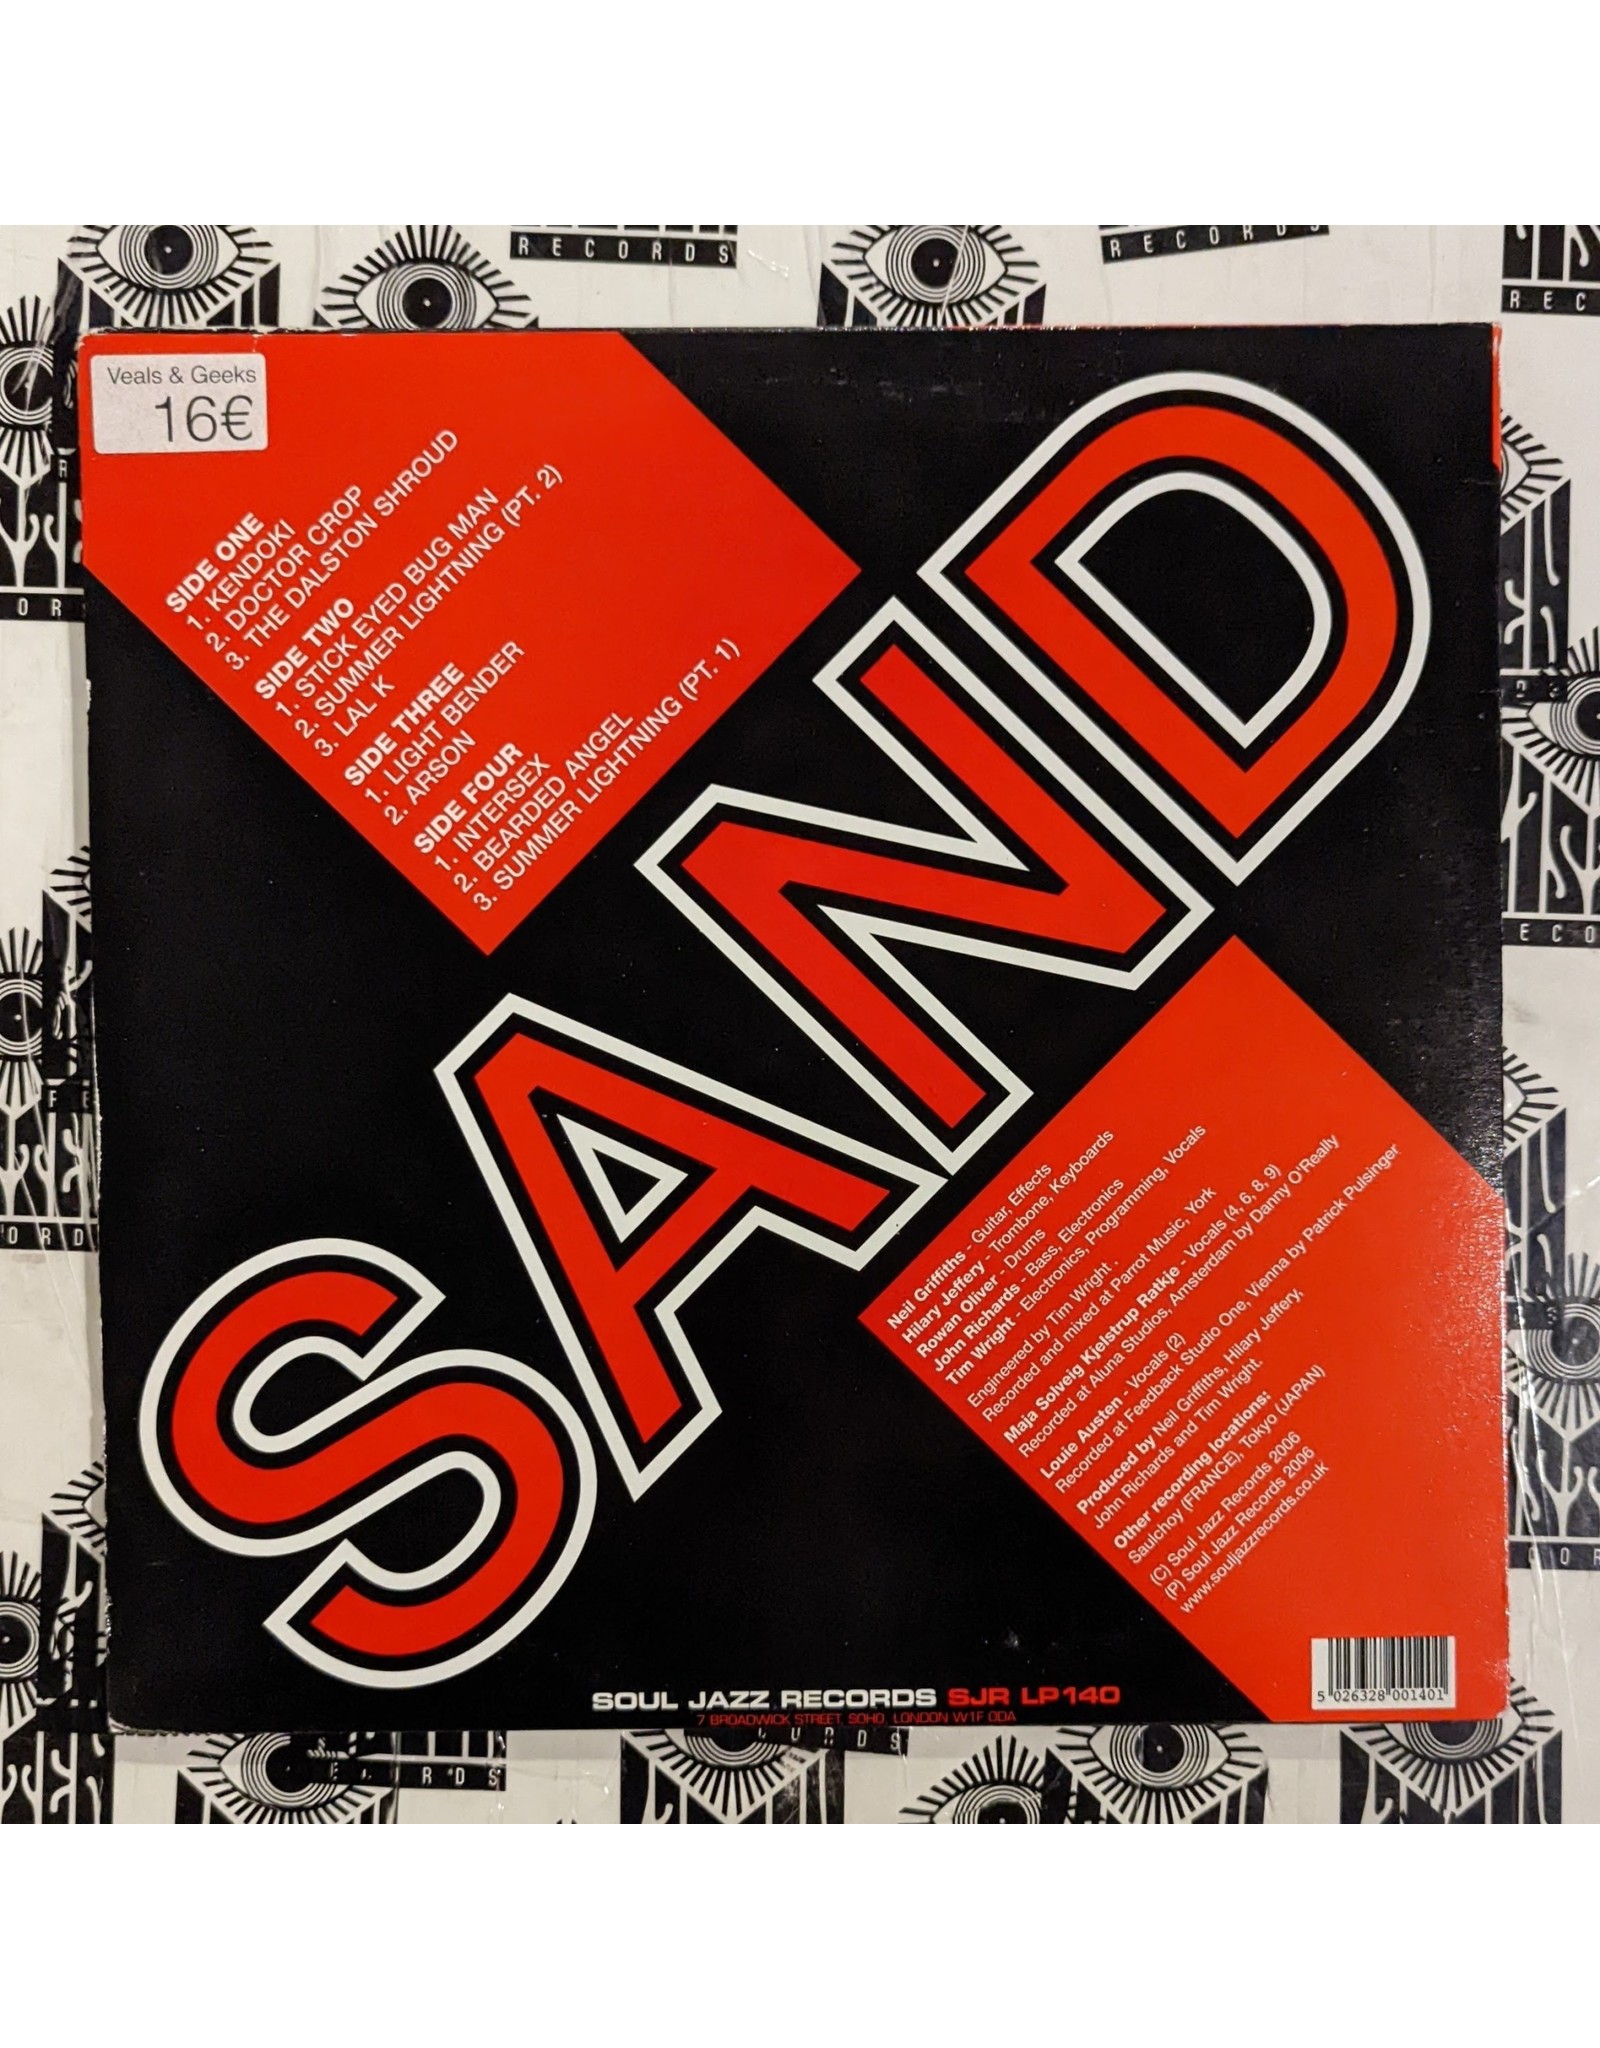 USED: Sand: The Dalston Shroud LP